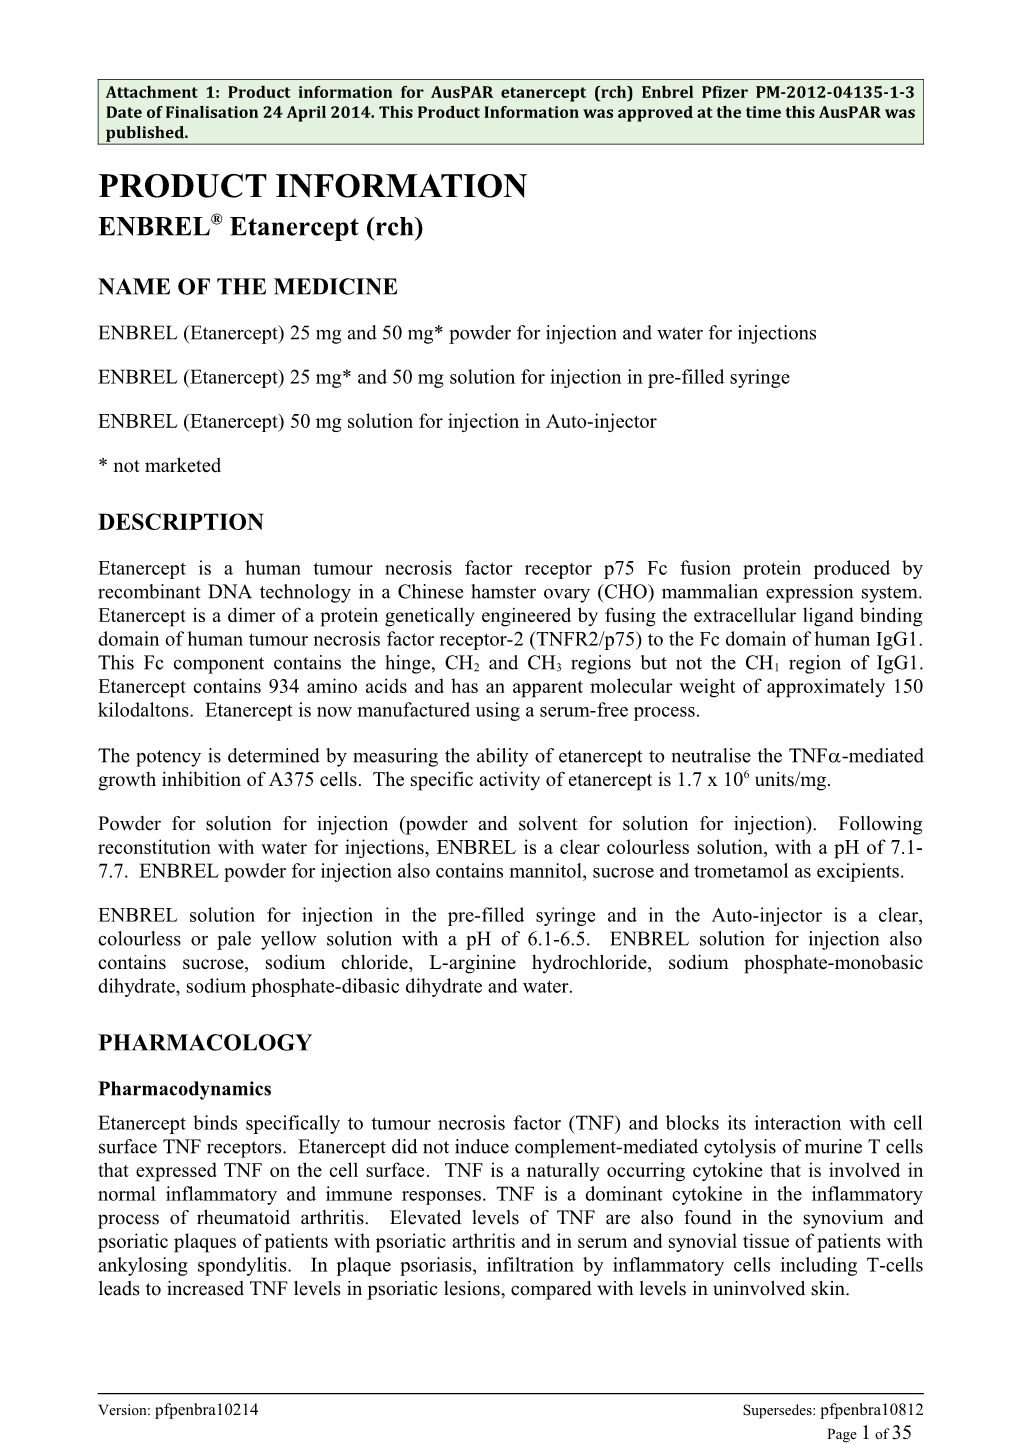 Auspar Attachment 1: Product Information for Enbrel (Etanercept (Rch))